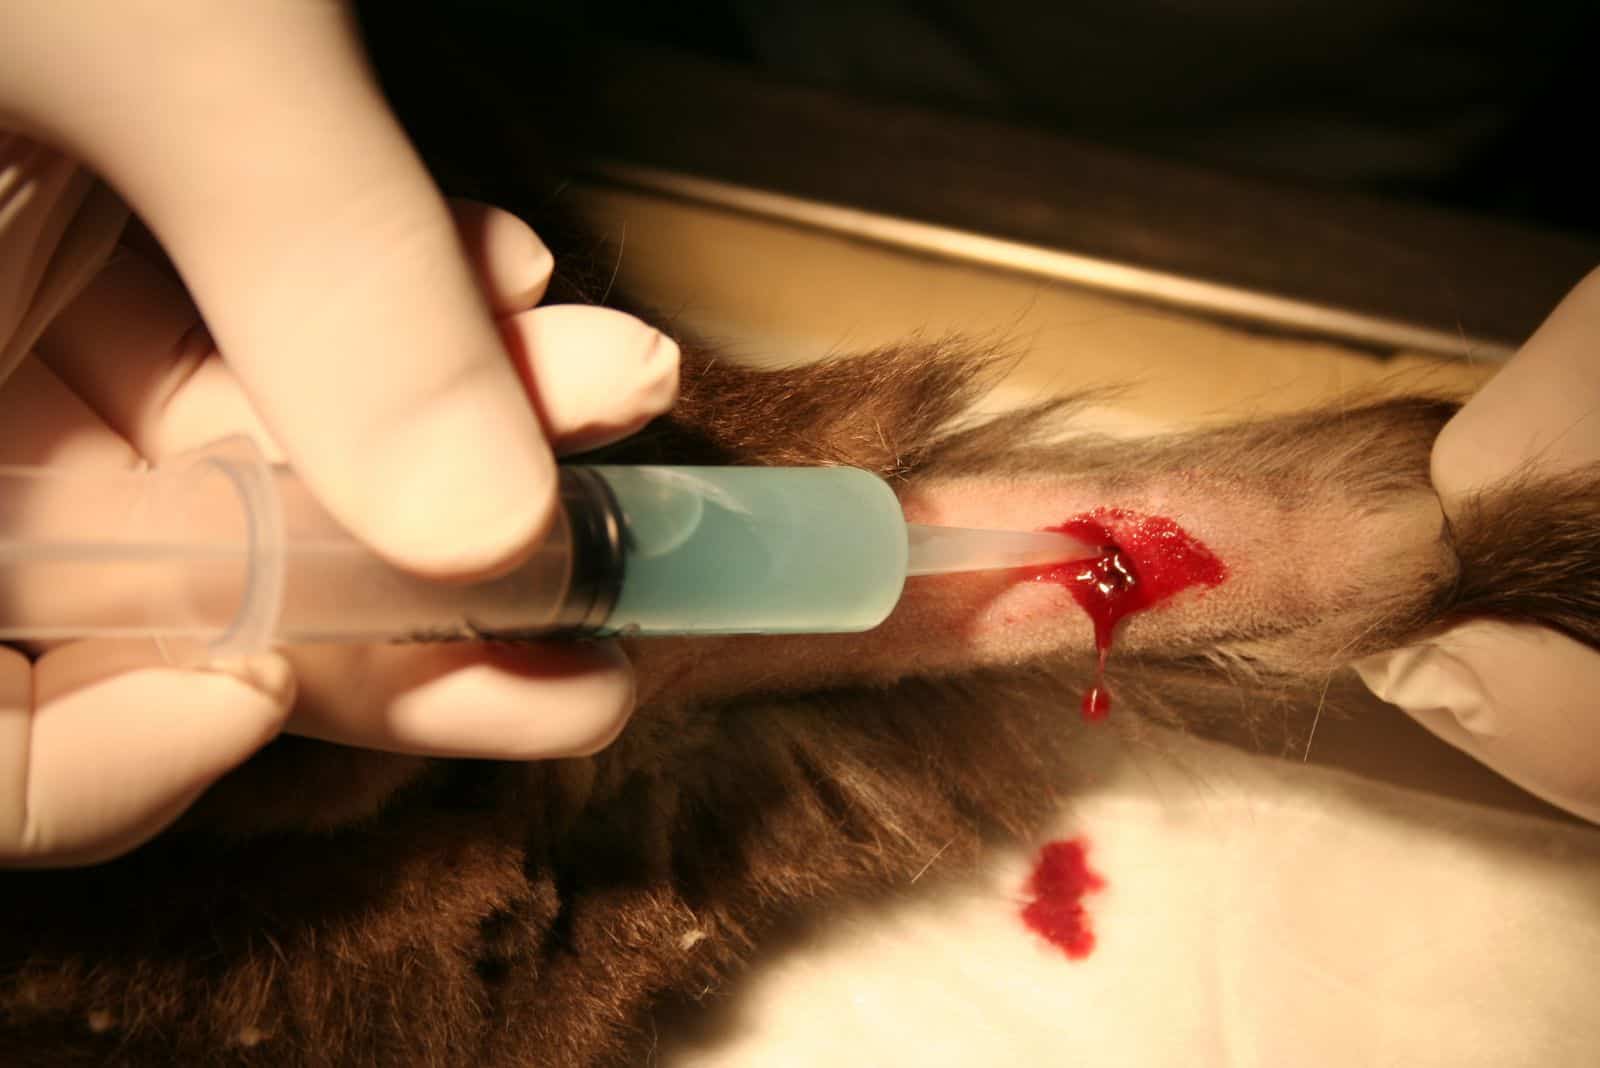 the vet cleans the dog's leg